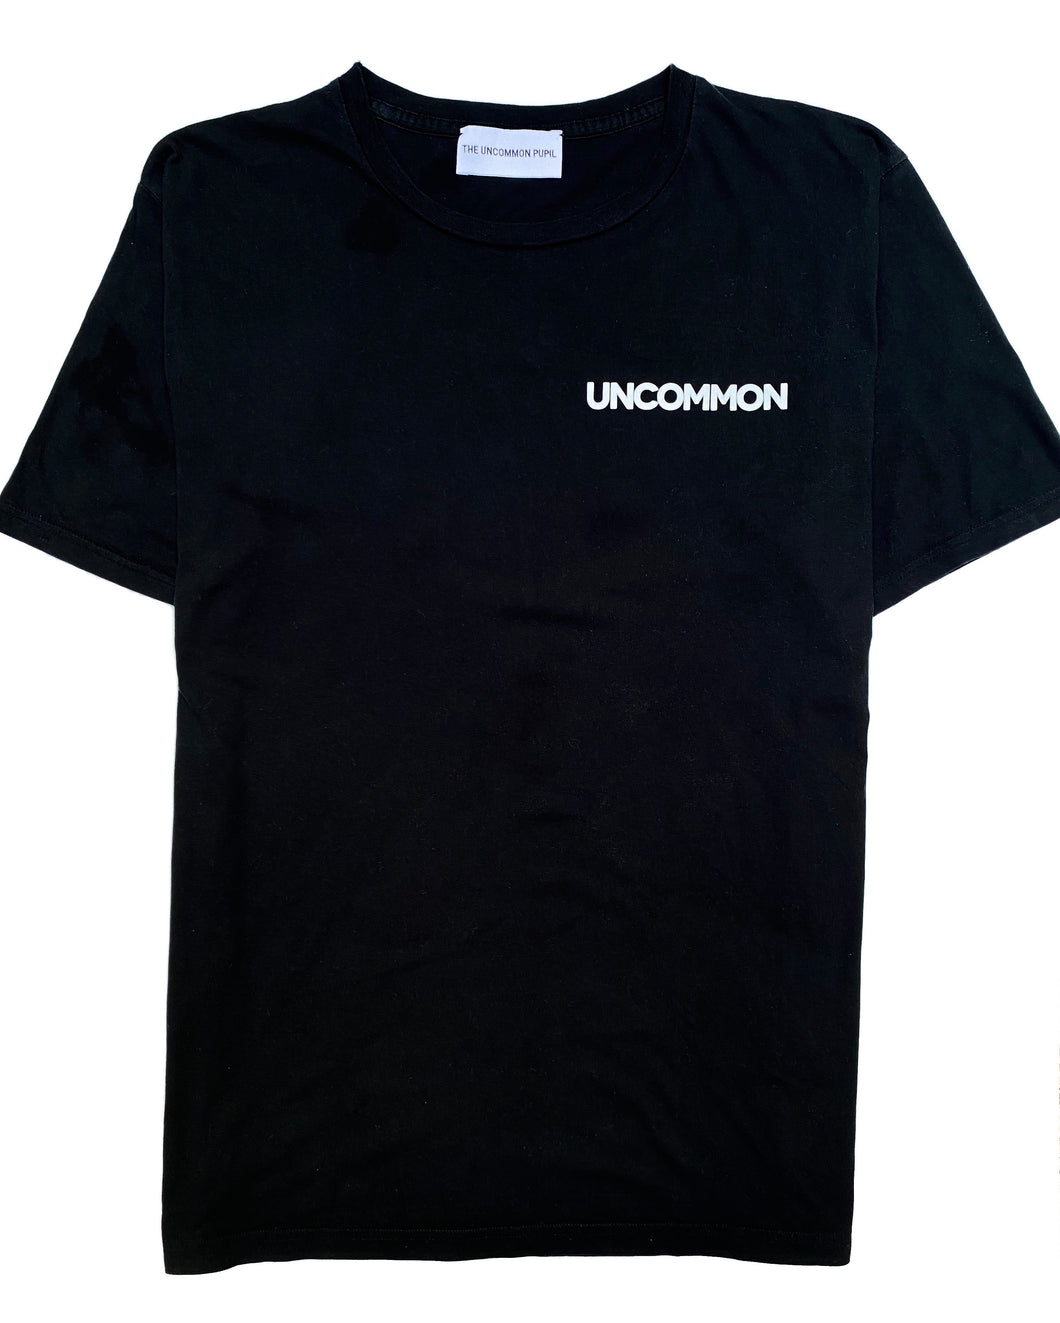 UNCOMMON Reflective T-Shirt - Black